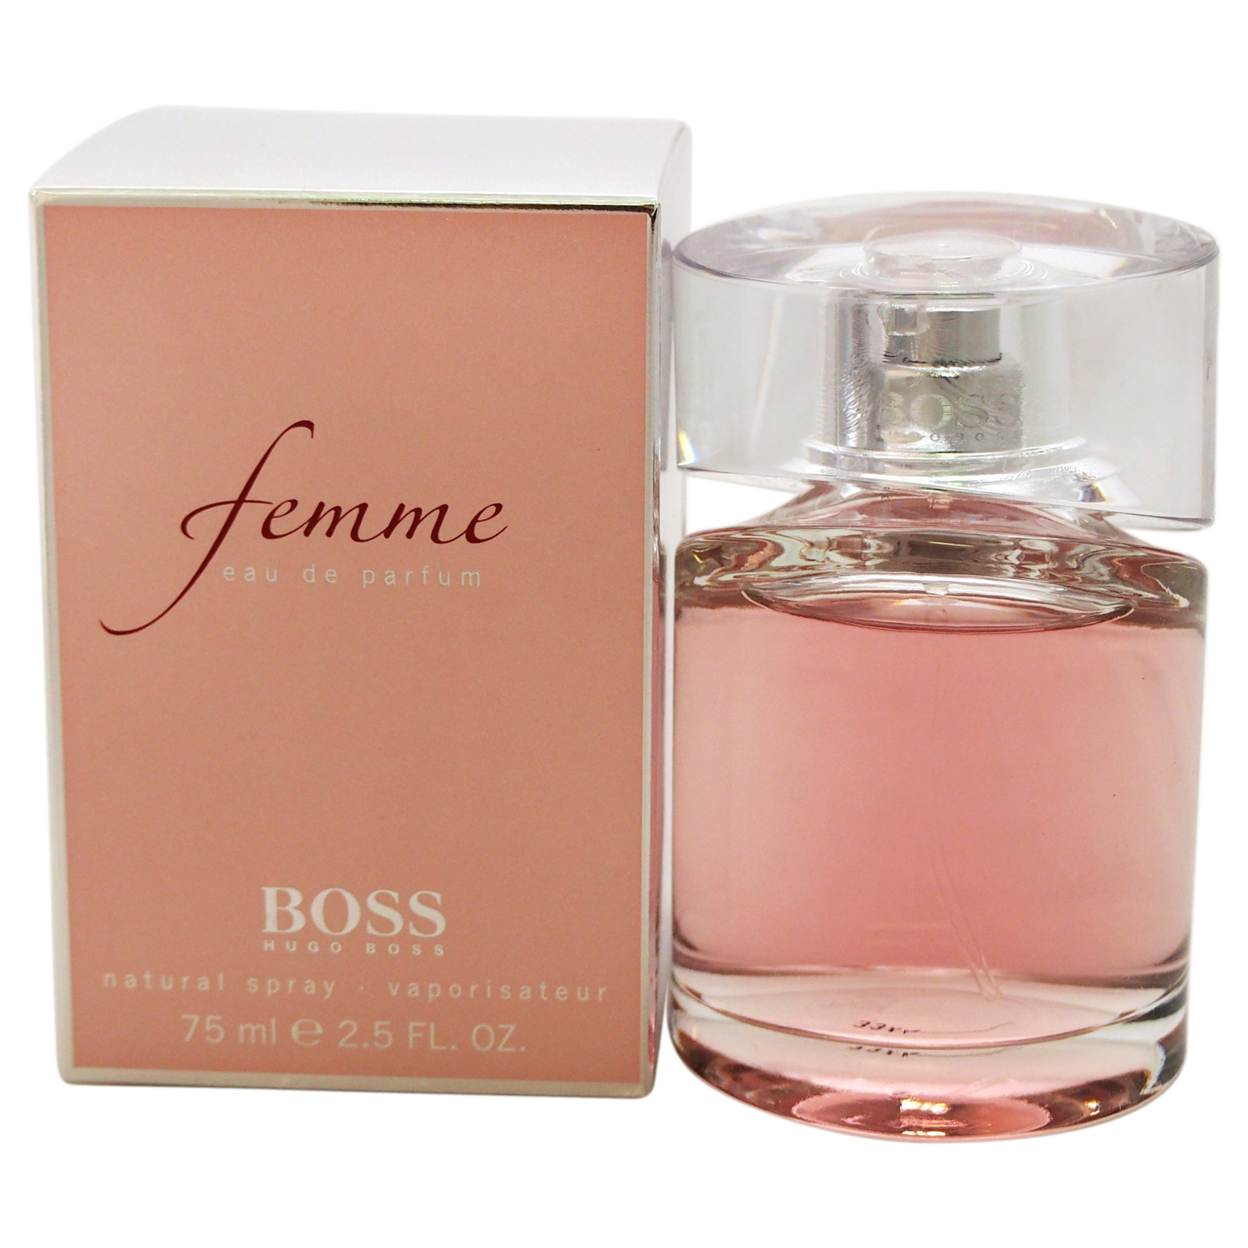 HUGO BOSS Boss Femme Eau de Parfum, Perfume for Women, 2.5 Oz - image 1 of 3